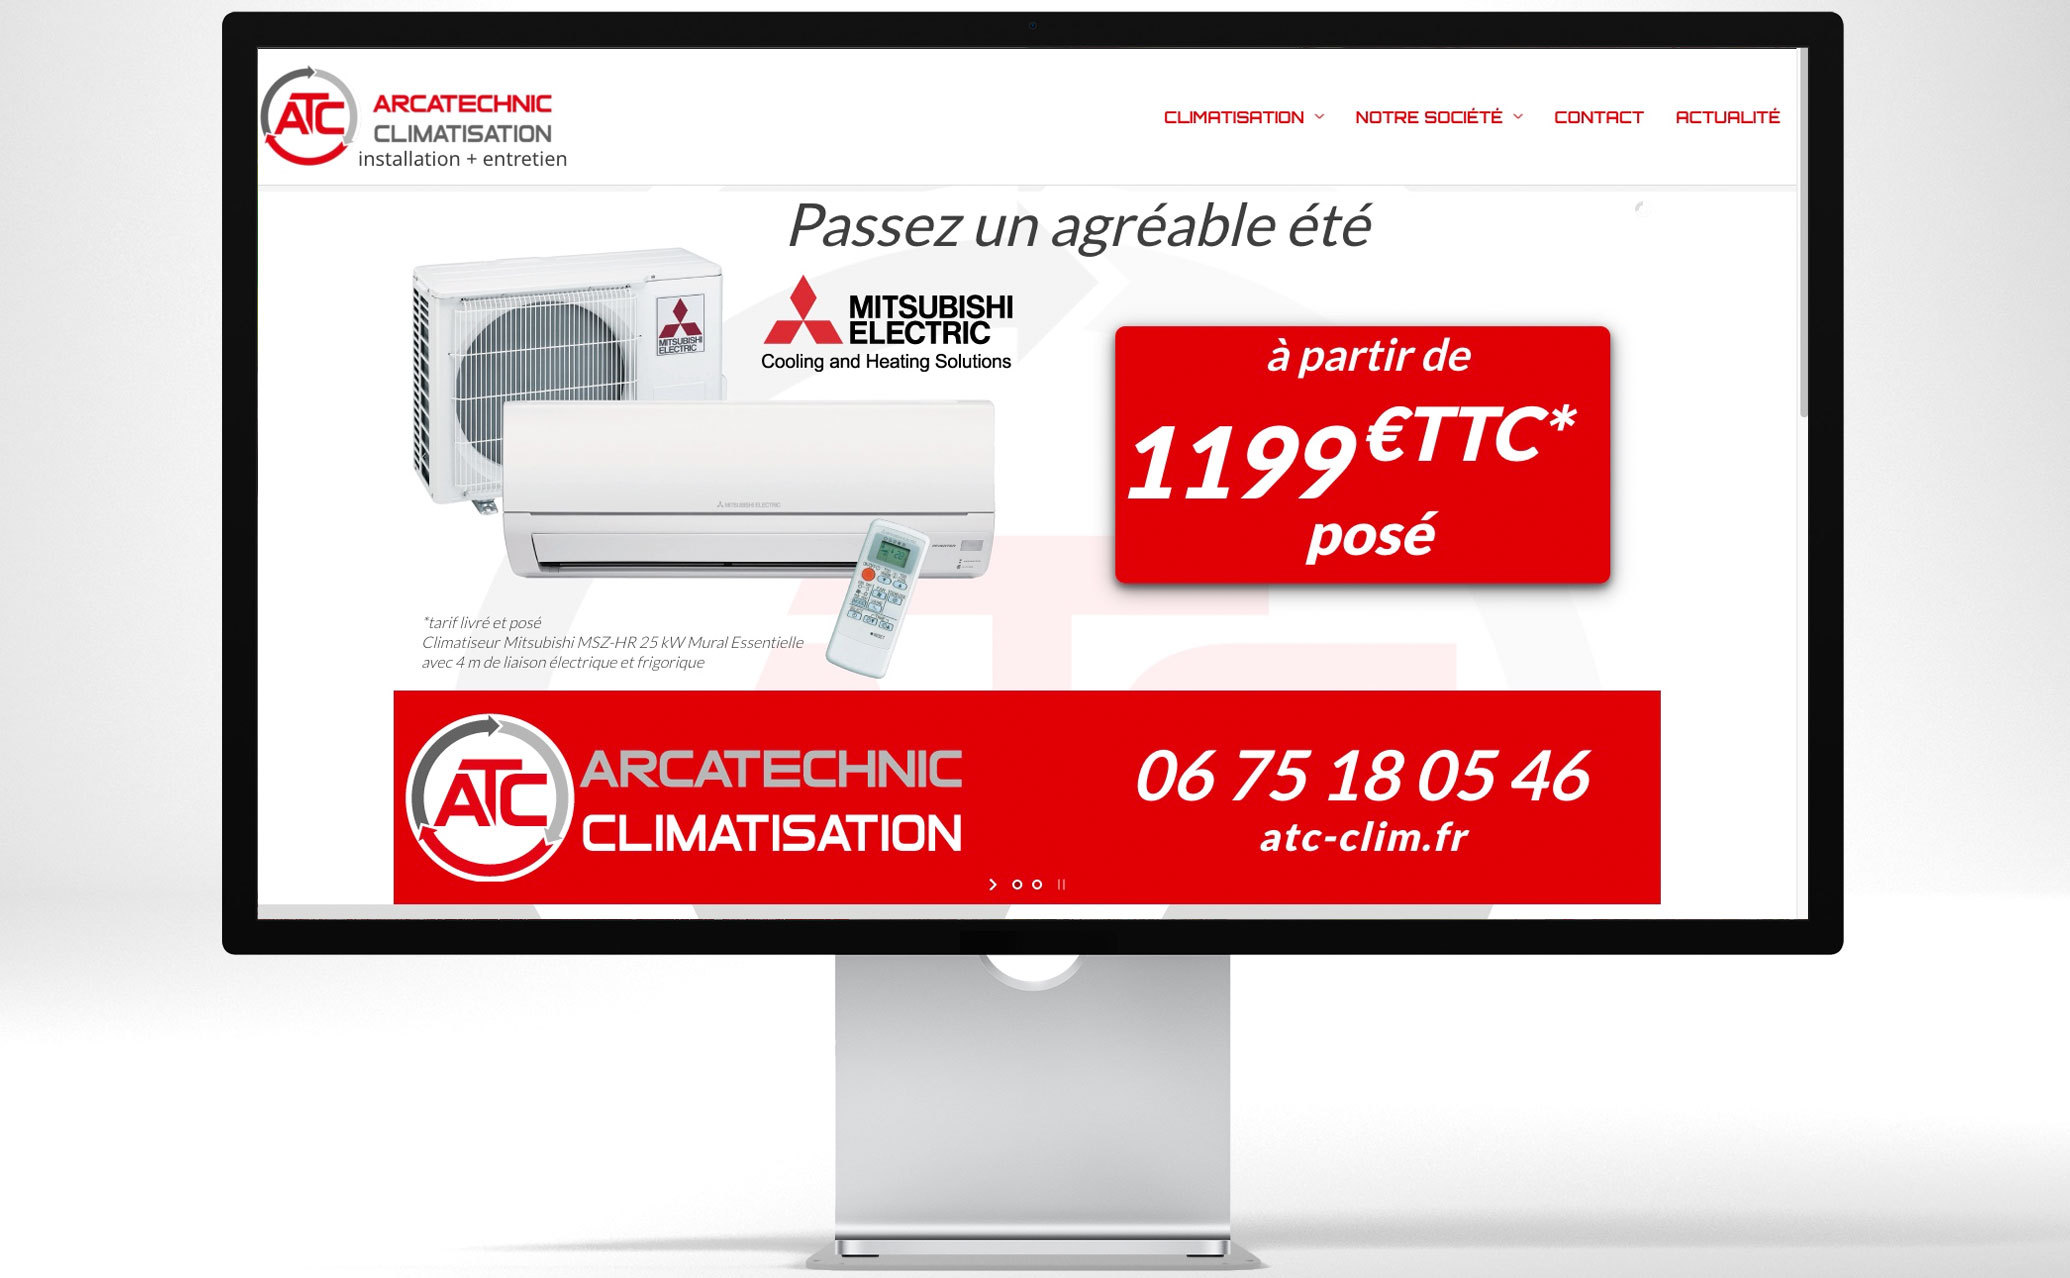 ATC - Arcatechnic climatisation - Toulon